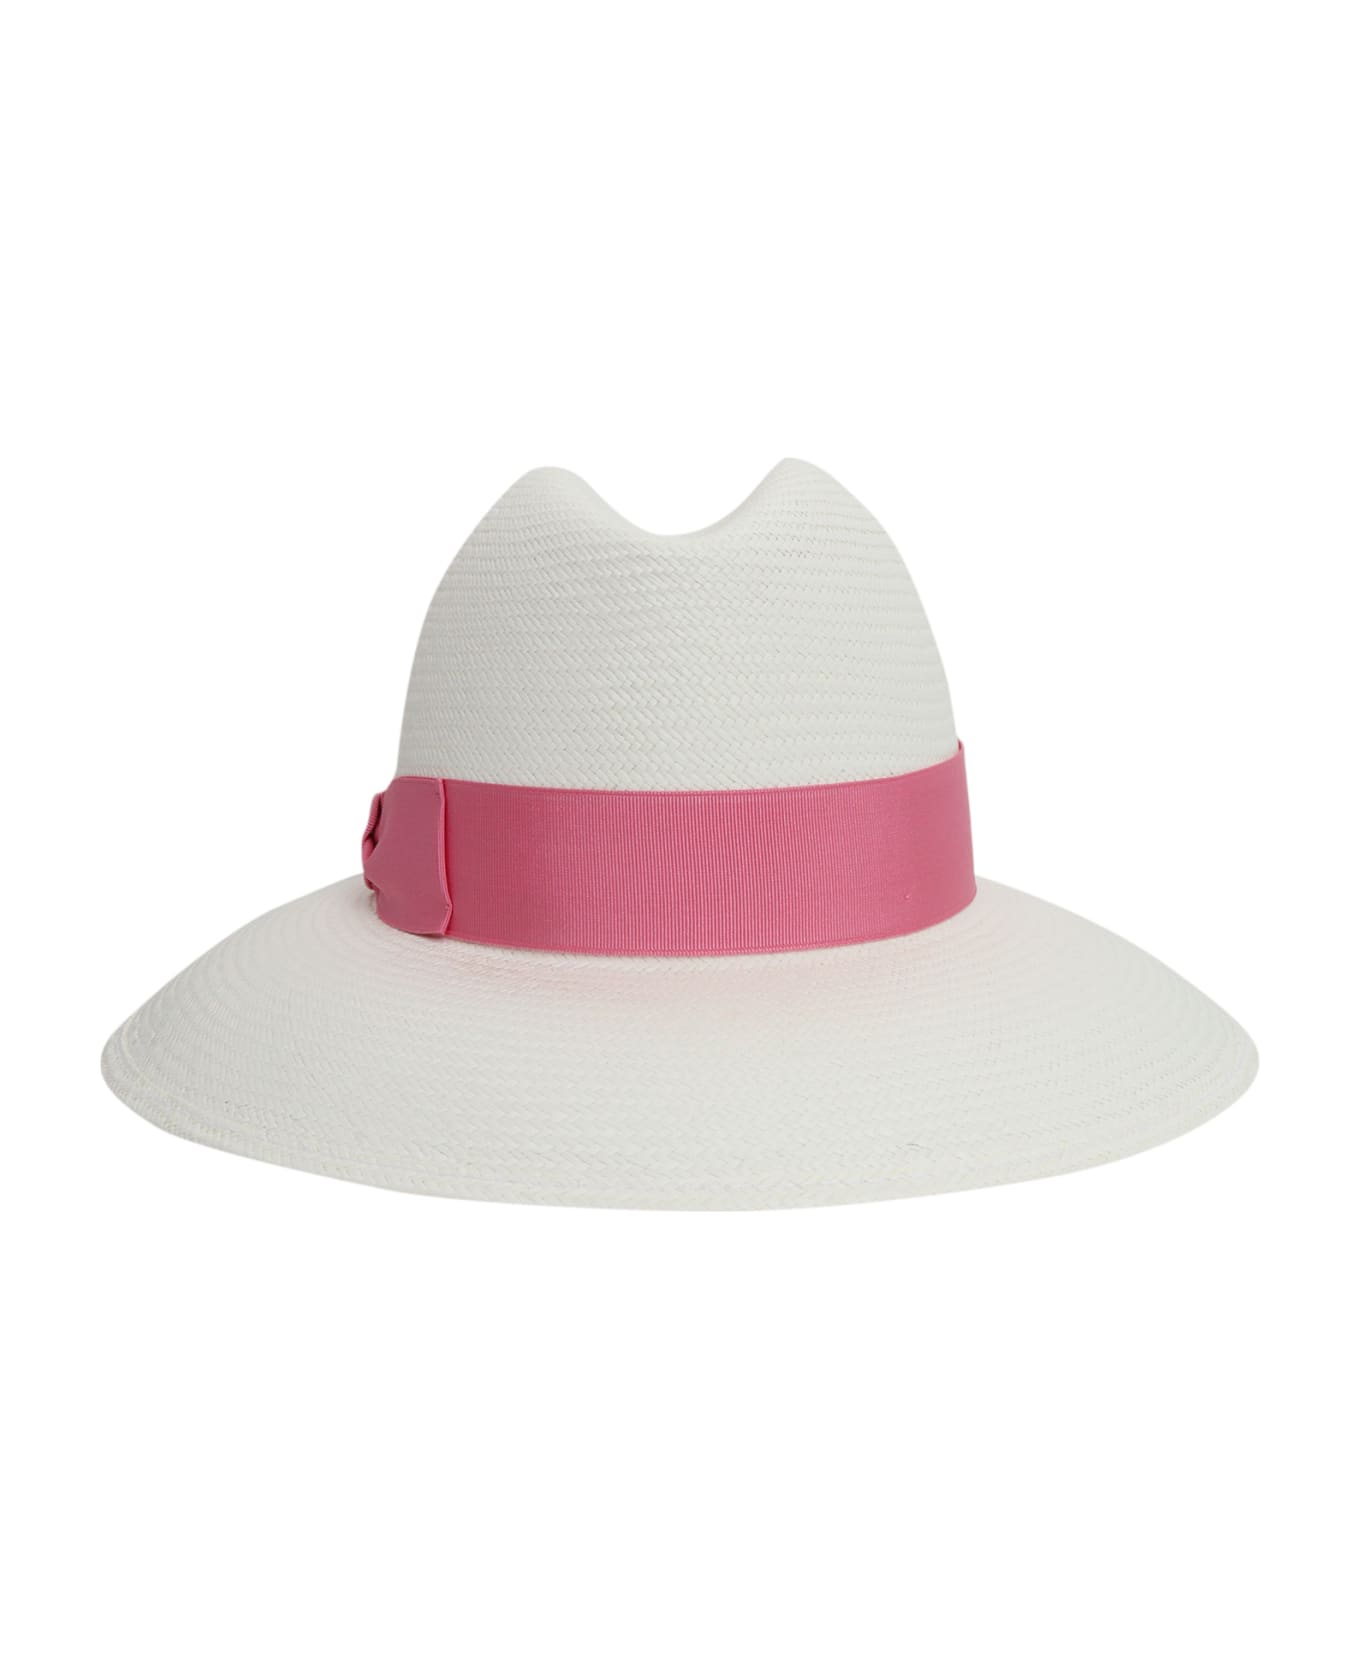 Panama Claudette Hat BORSALINO for Women, Fast Shipping